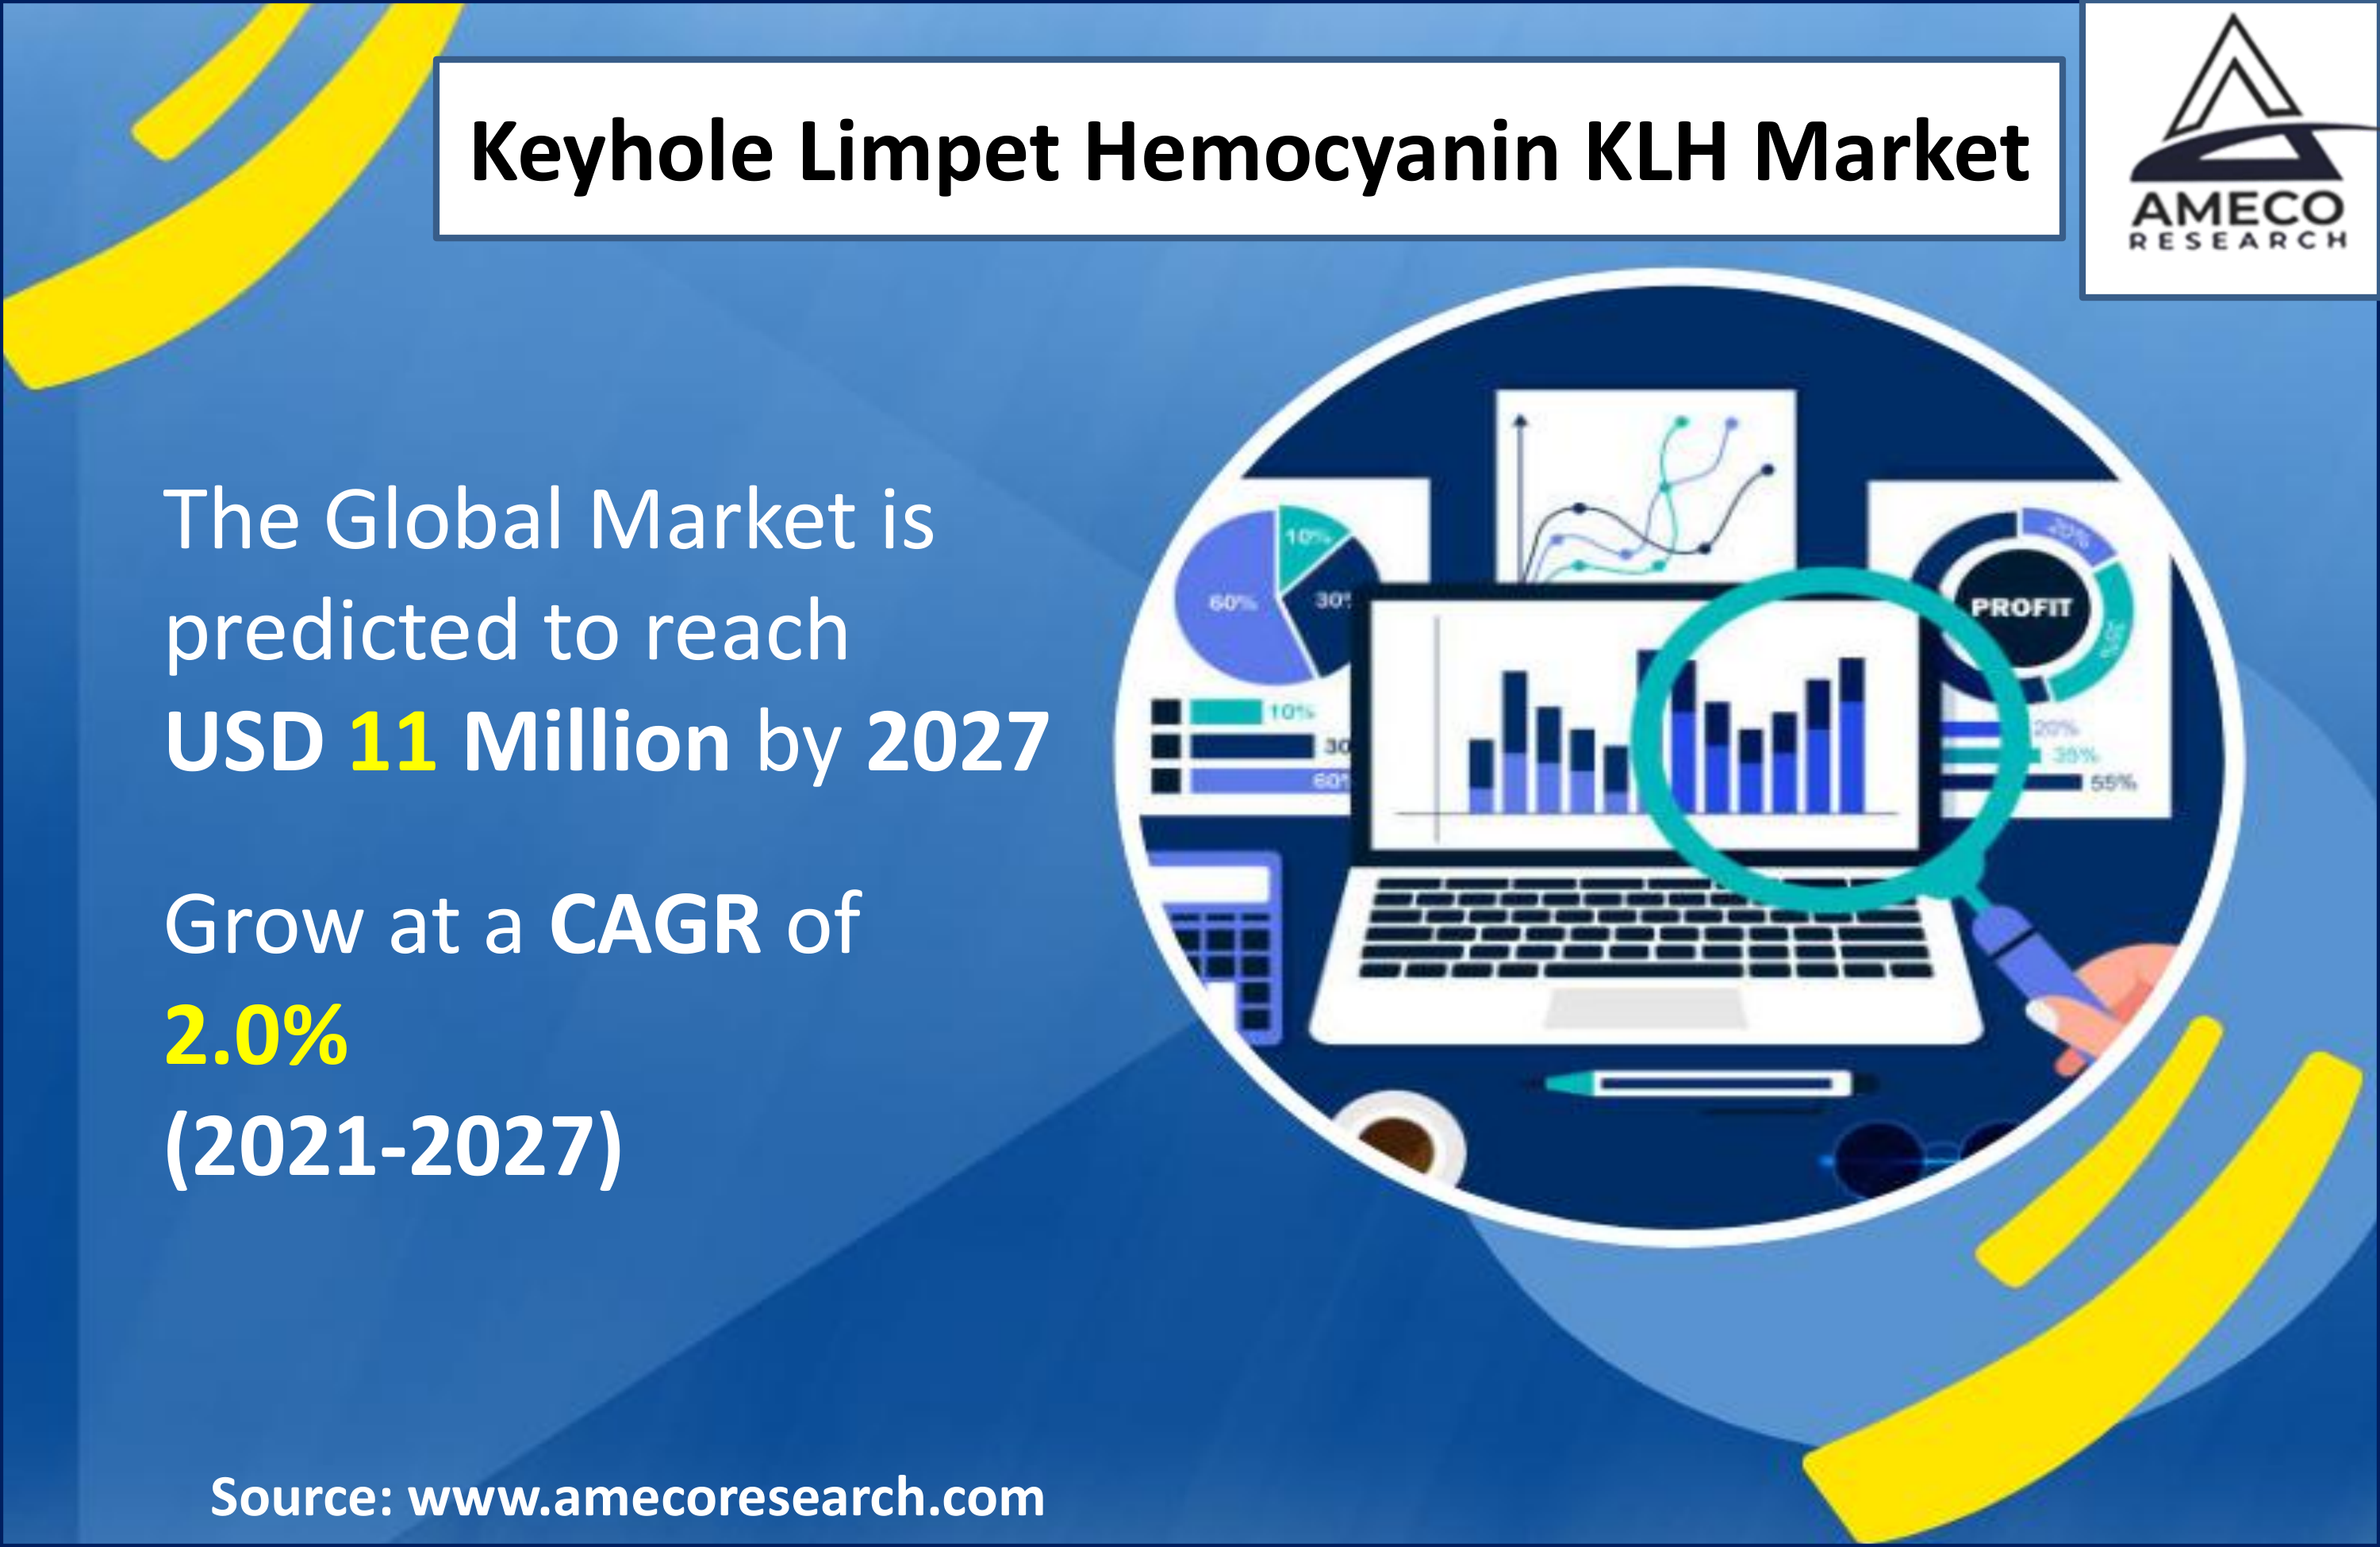 Keyhole Limpet Hemocyanin KLH Market